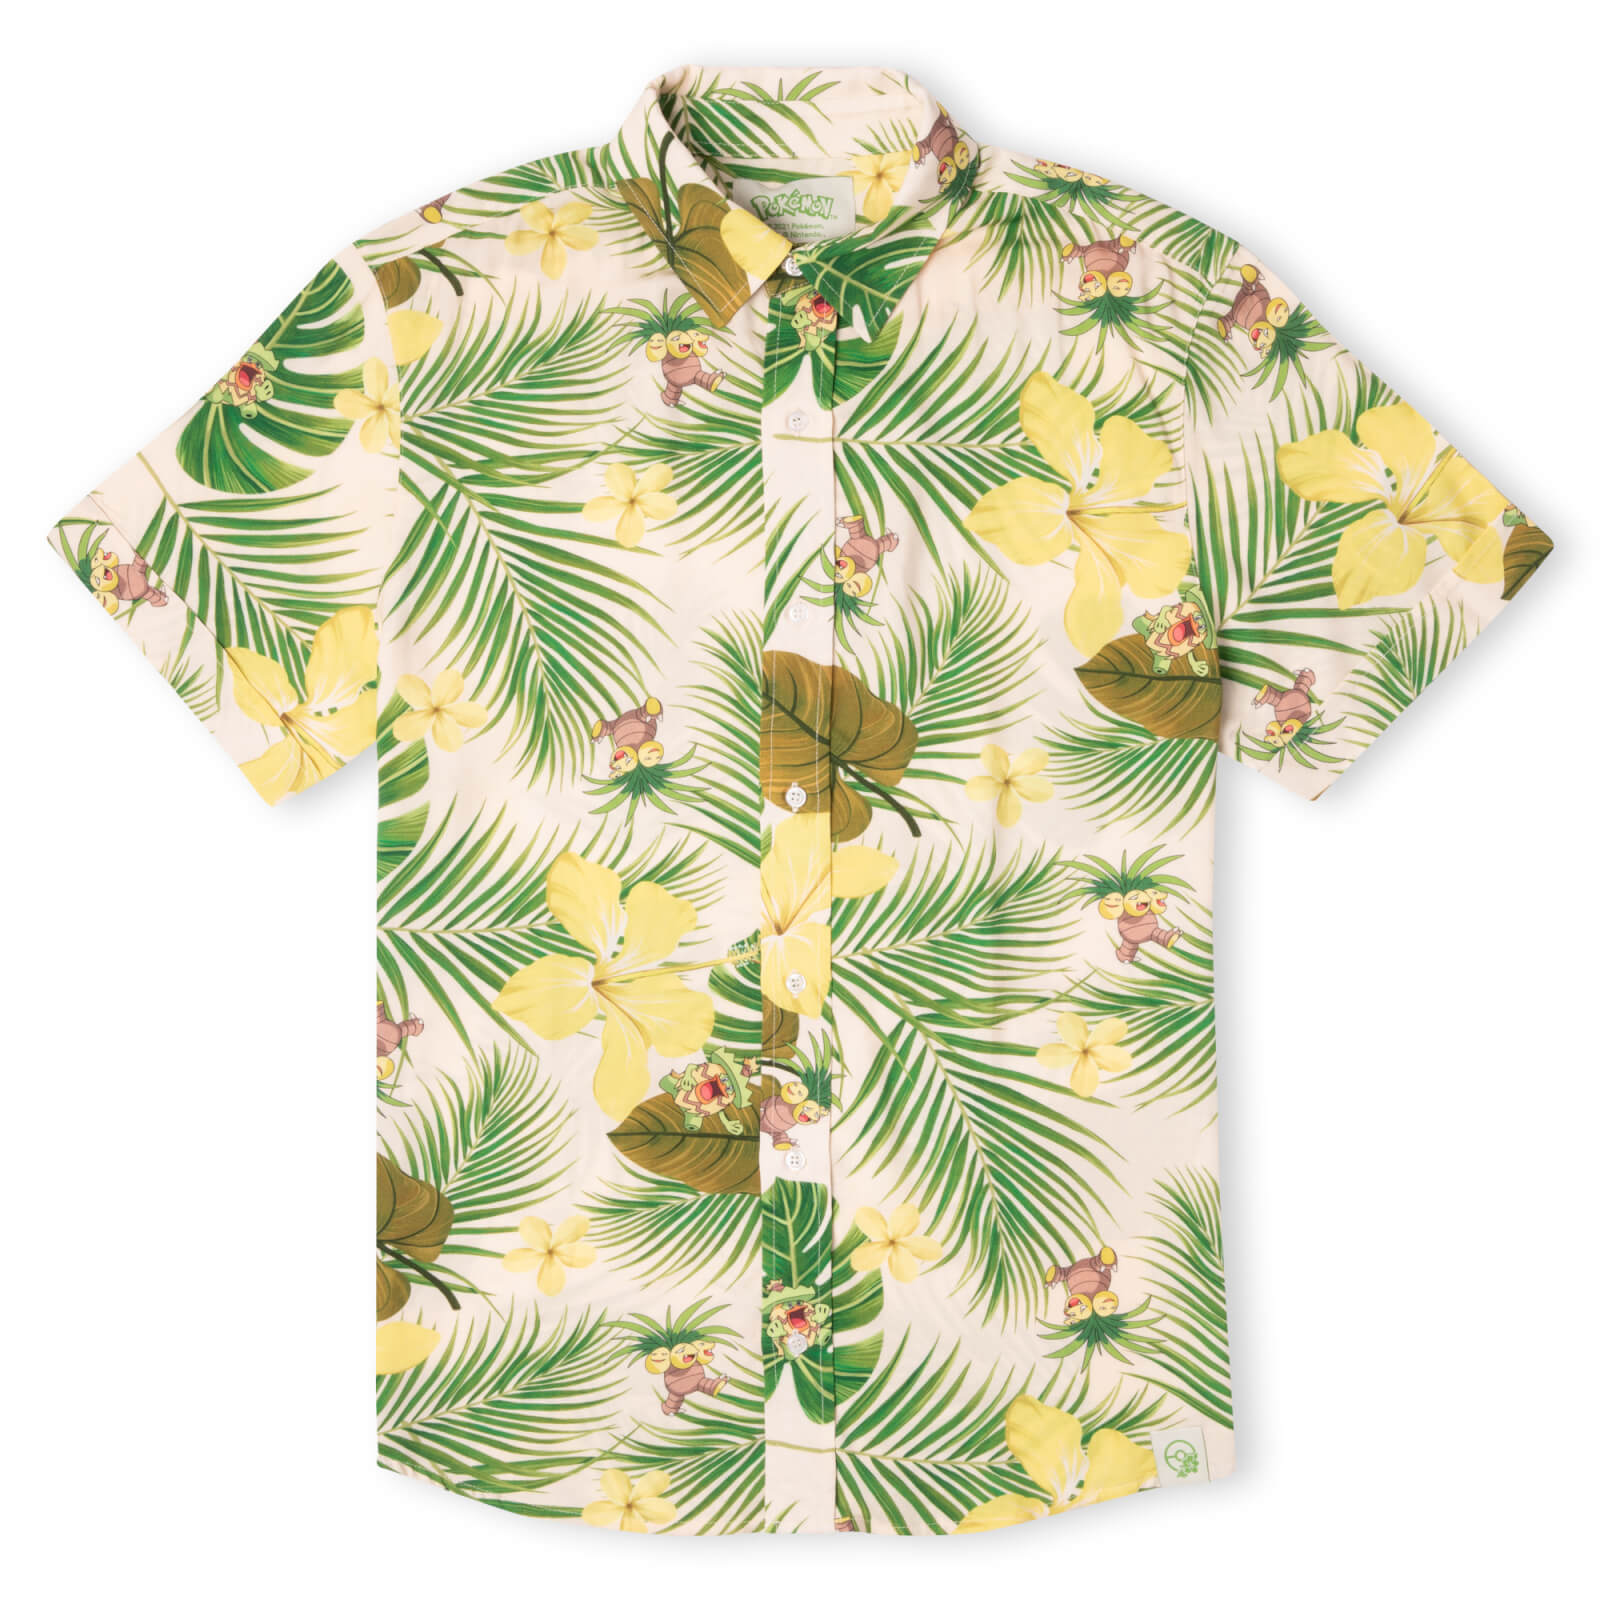 Pokémon Exeggutor Tropical Print Shirt - Cream - M